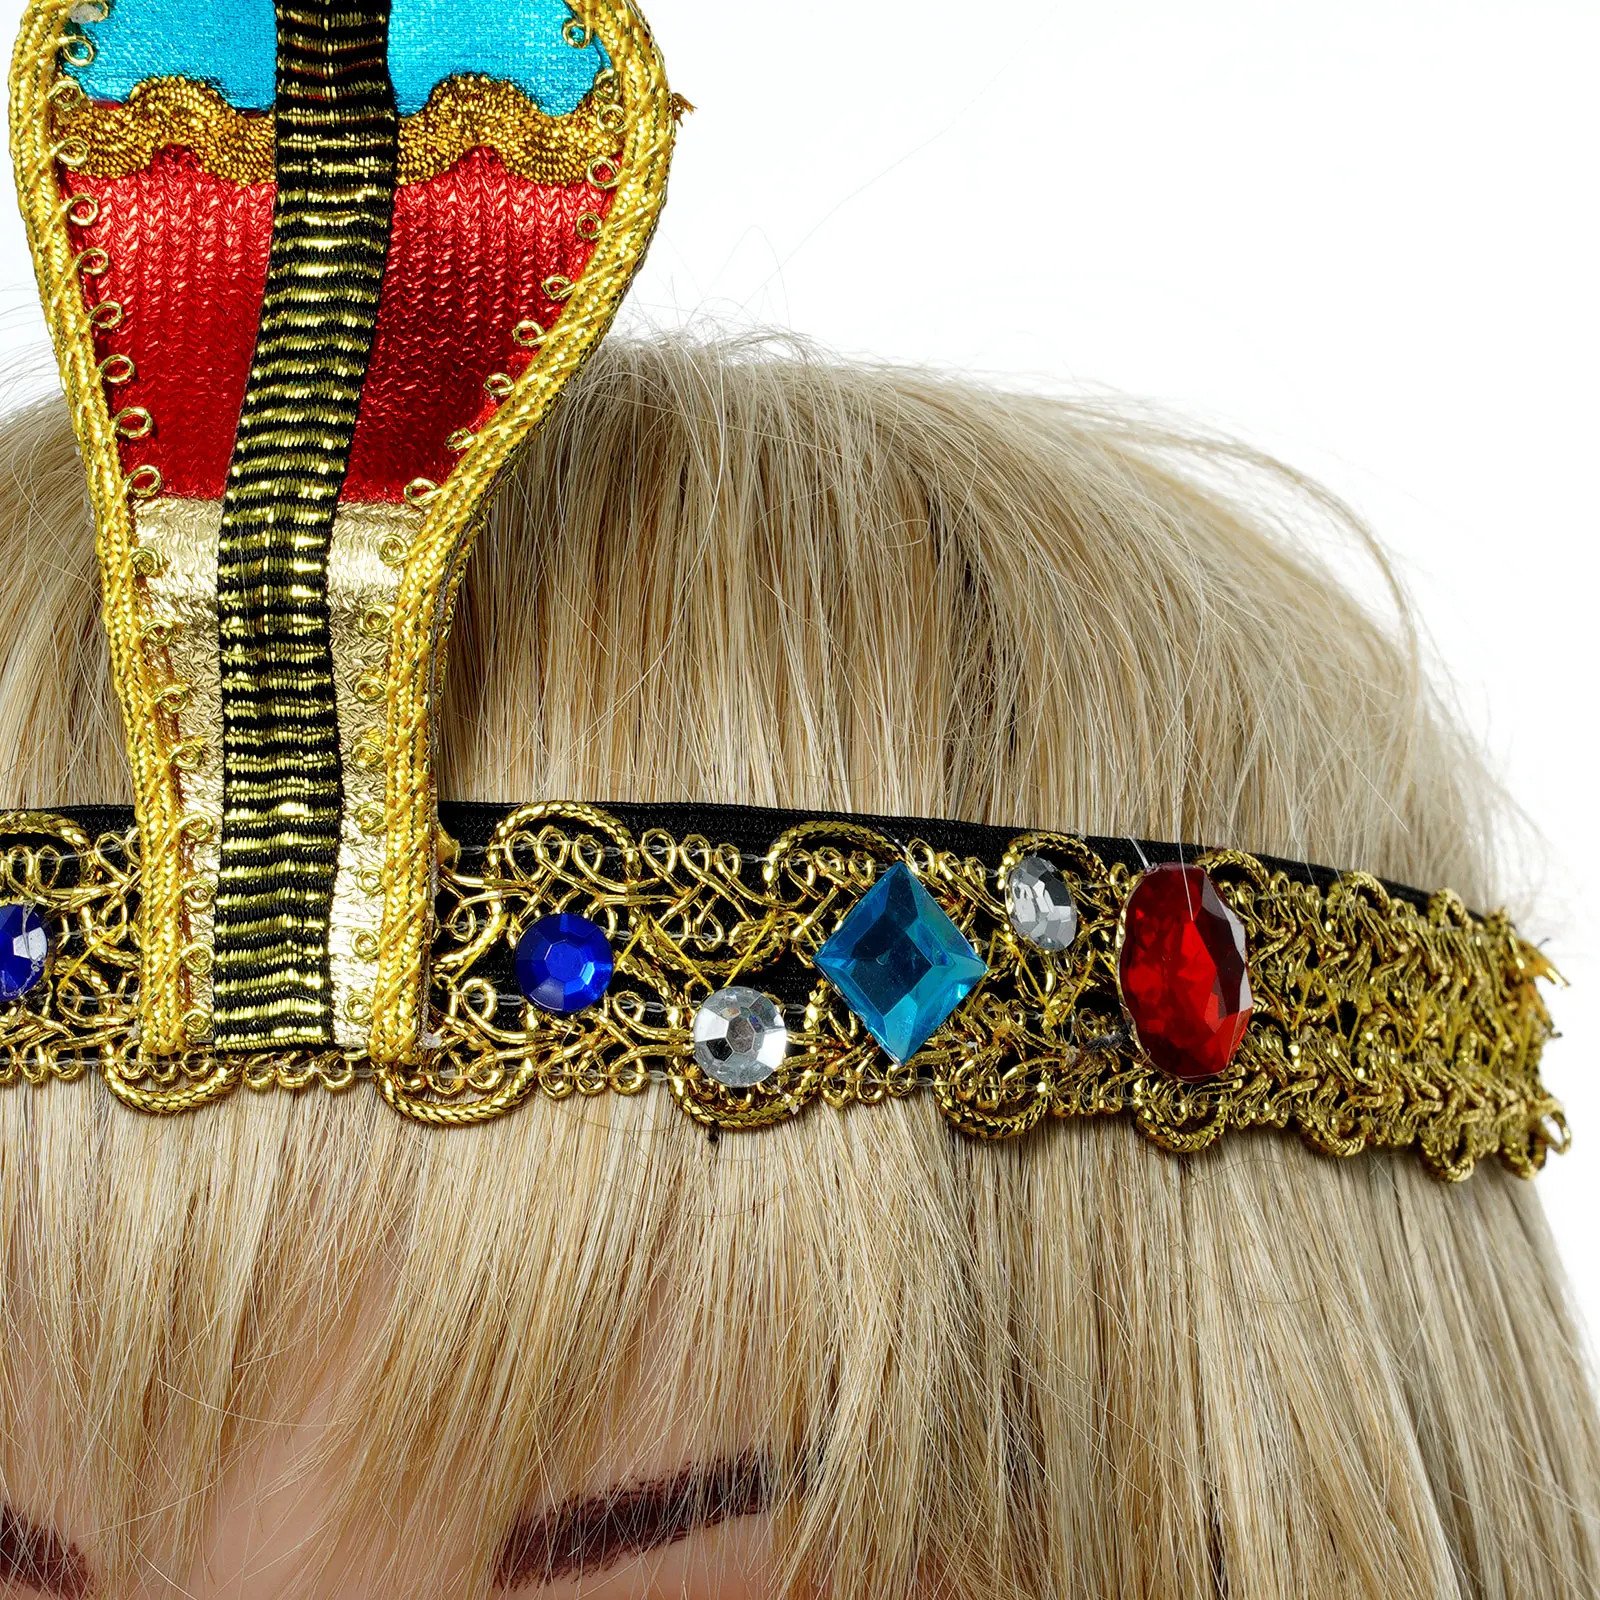 Snake Shape Headdress Halloween Cosplay Costume Jewelry Golden Cleopatra Snake-shaped Headdress Treasure Queen Hair Accessories goddess costume